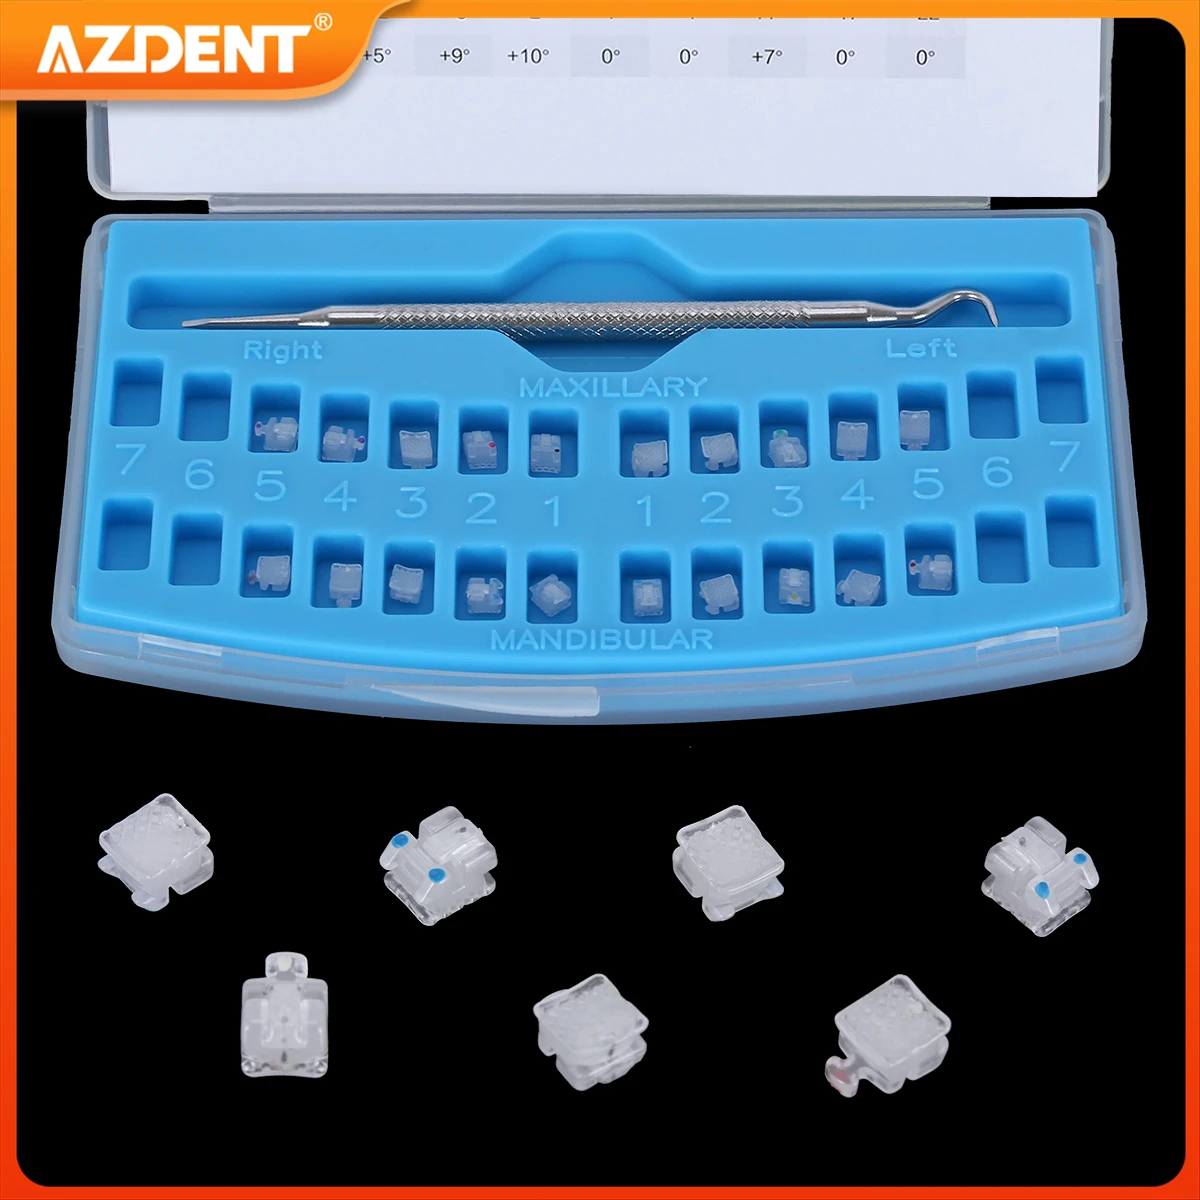 

20pcs AZDENT Dental Bracket Orthodontic Braces Self-Ligating Roth/MBT 0.022 Hooks 3-4-5 with Tool Third Generation Translucen